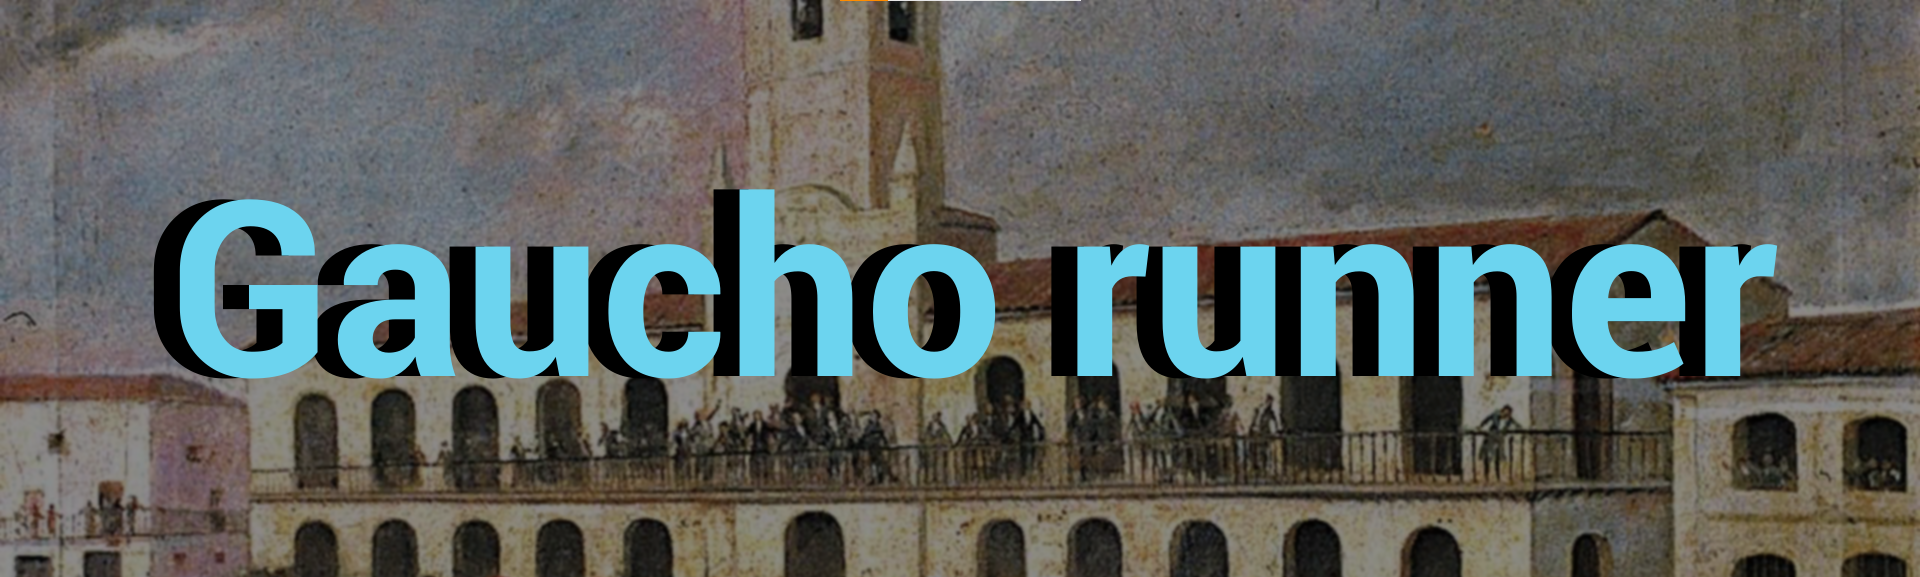 Gaucho runner